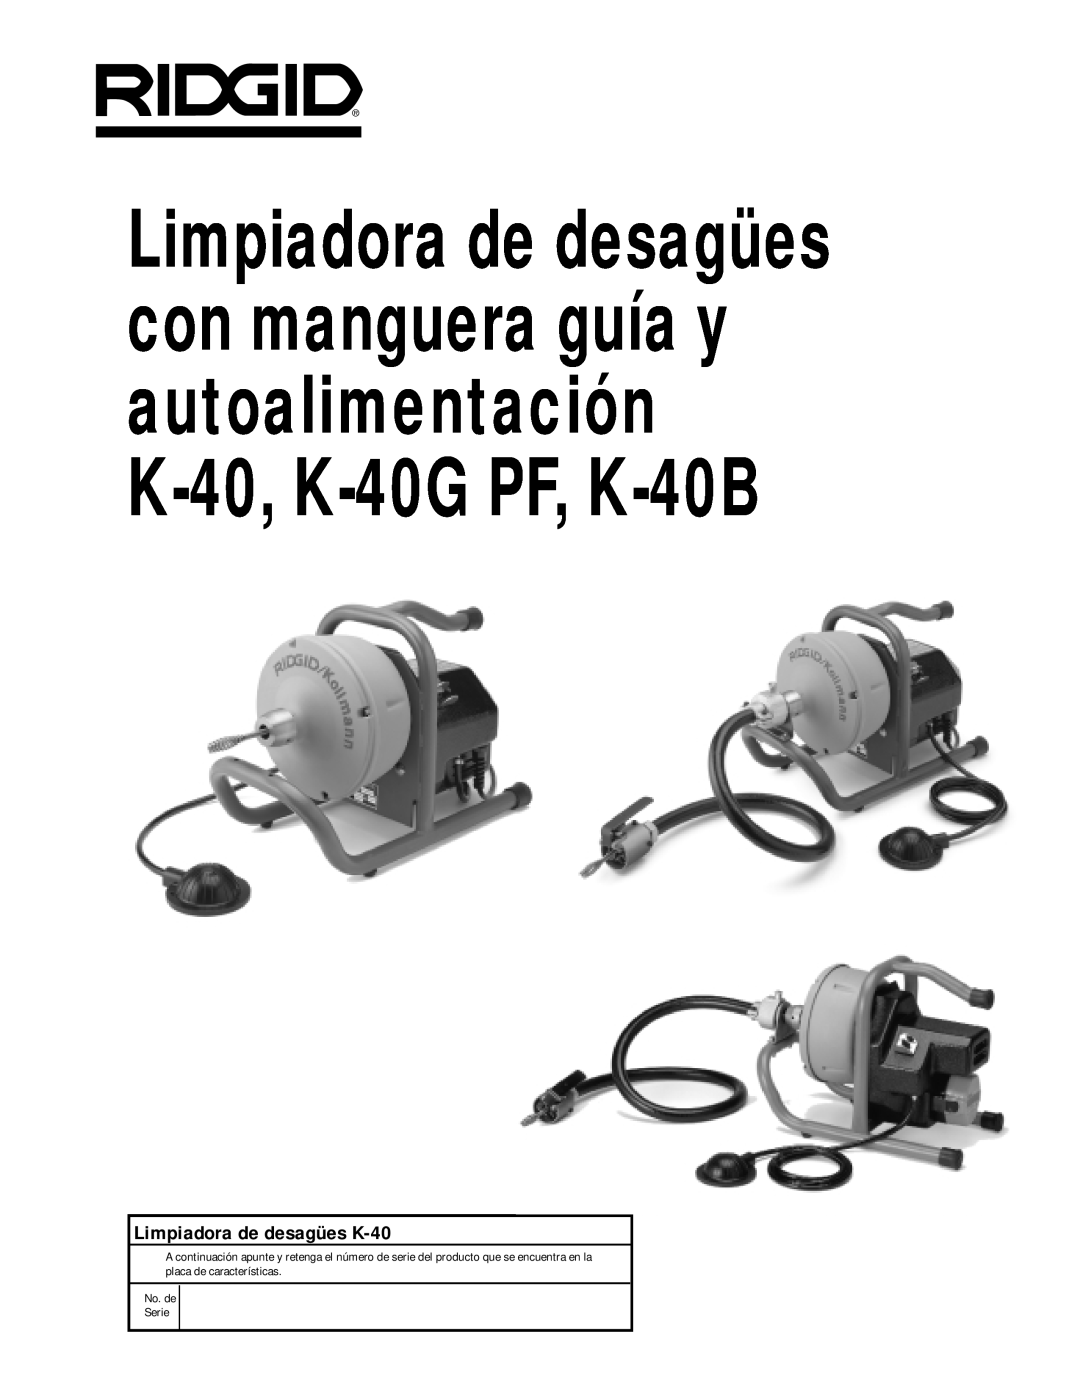 RIDGID K-40B, K-40G PF manual Limpiadora de desagües K-40, No. de Serie 